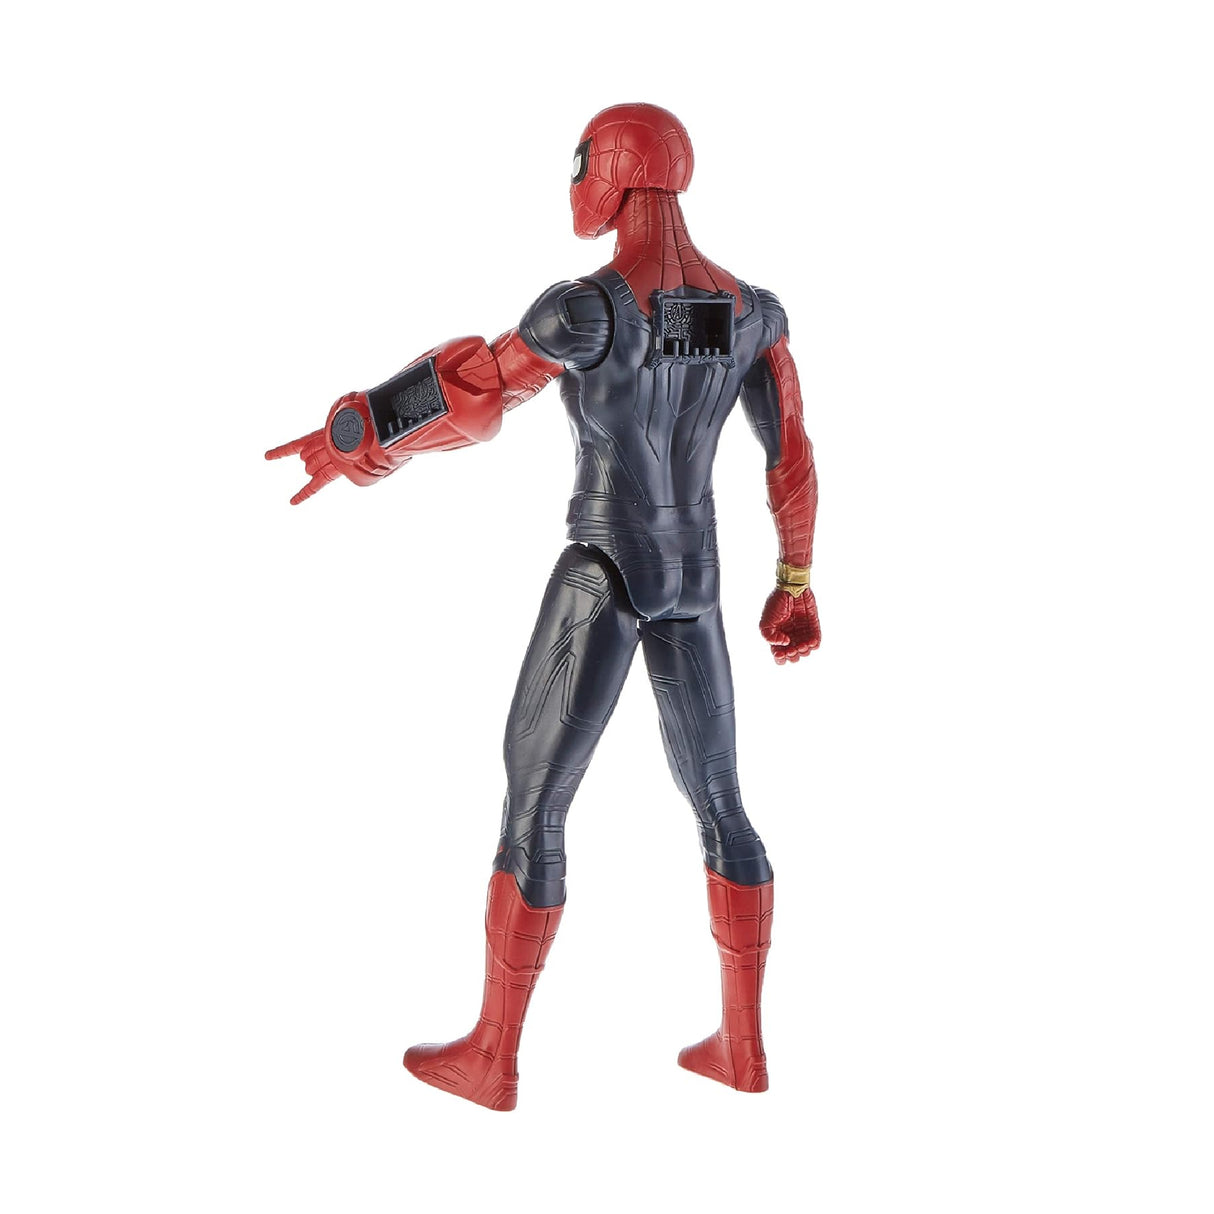 Marvel Avengers Titan Hero Series Iron Spider 12-inch Action Figure